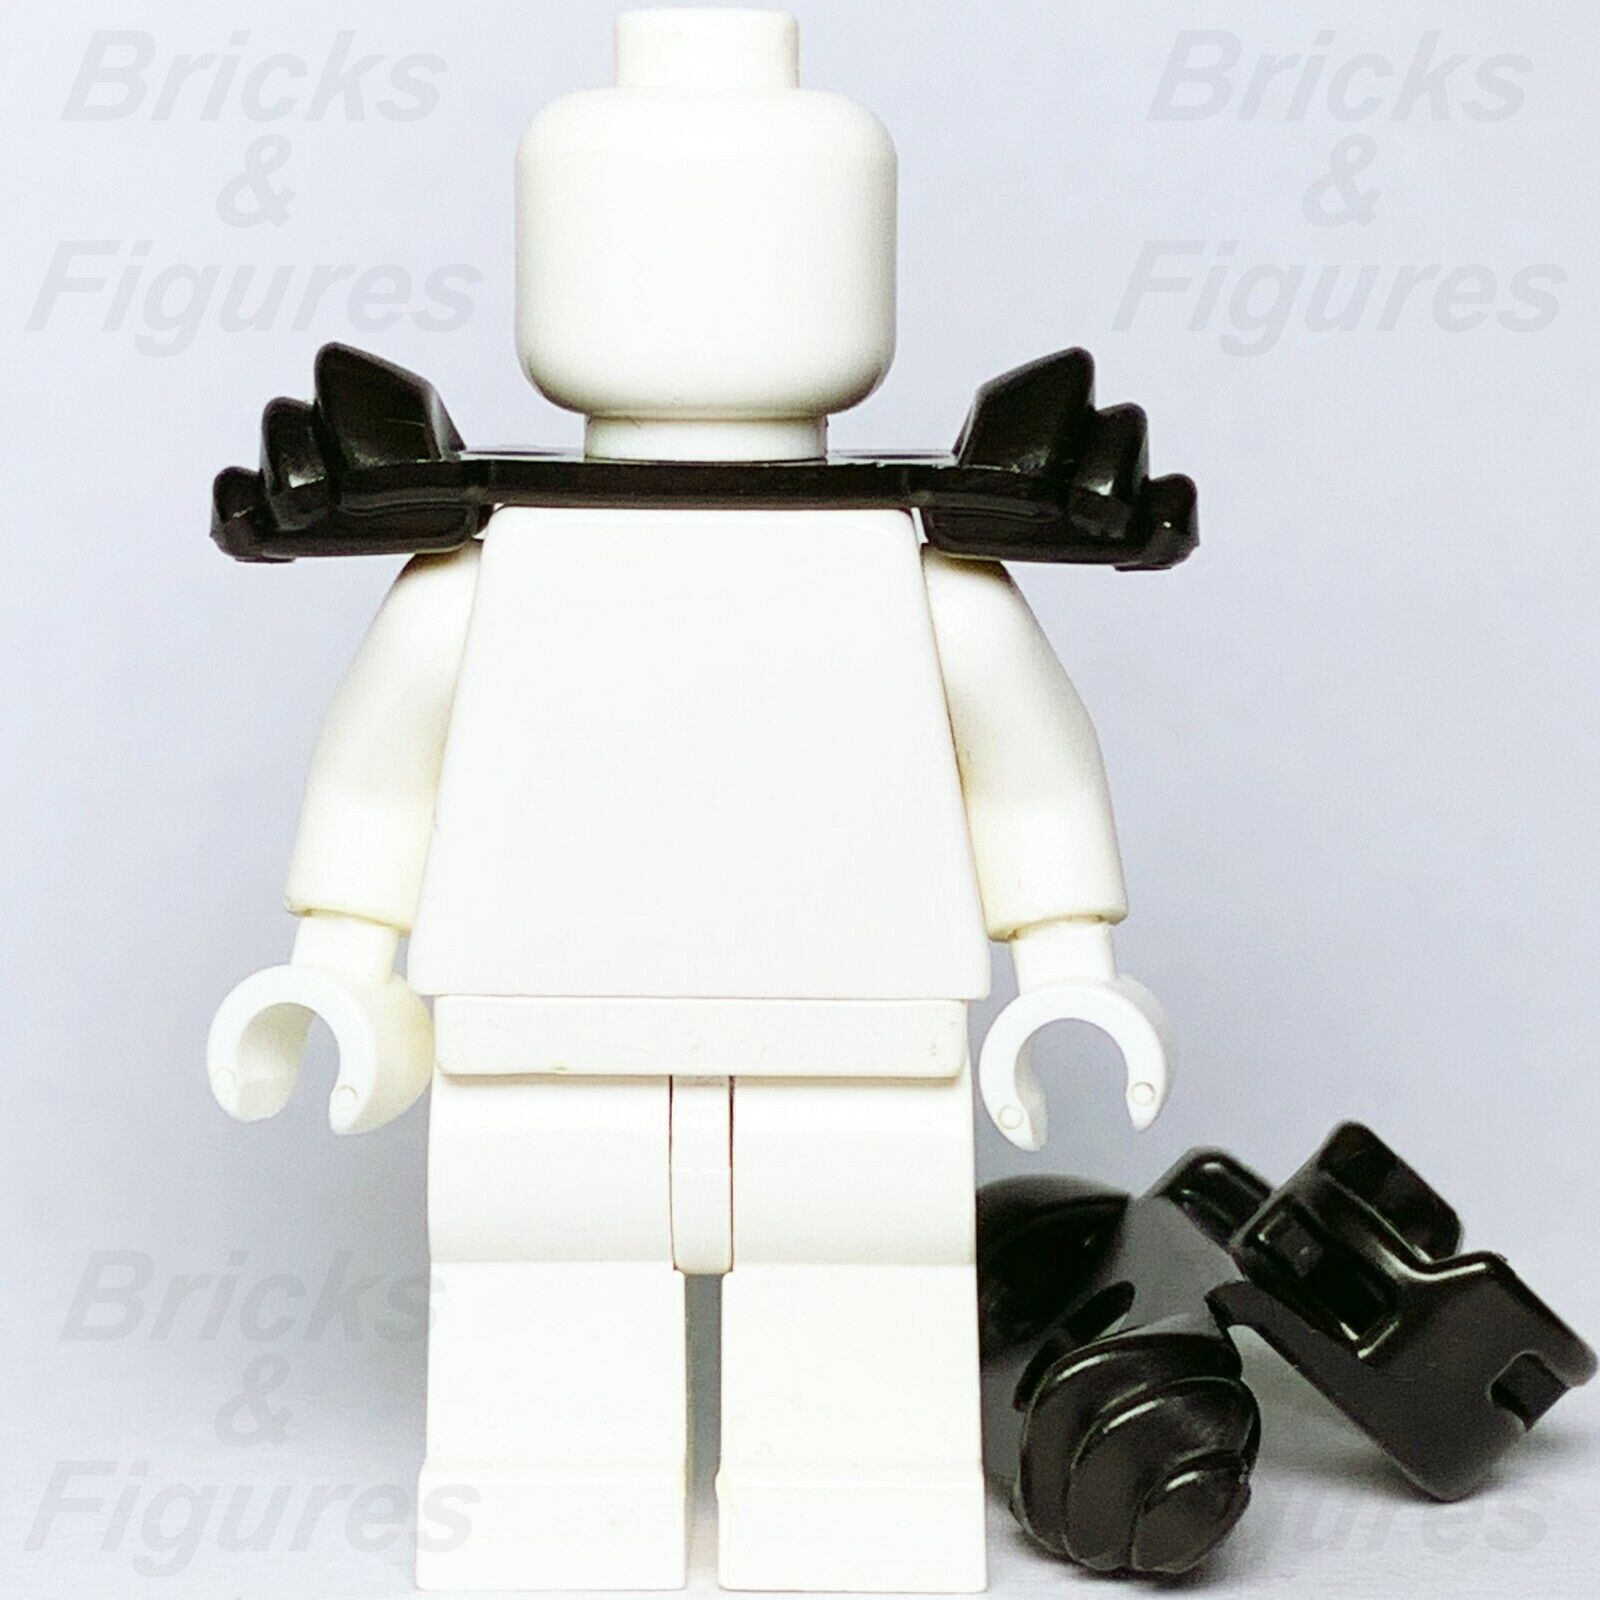 2 x Ninjago LEGO Black Ninja Shoulder Pads with Scabbard for two Katana Swords Part - Bricks & Figures